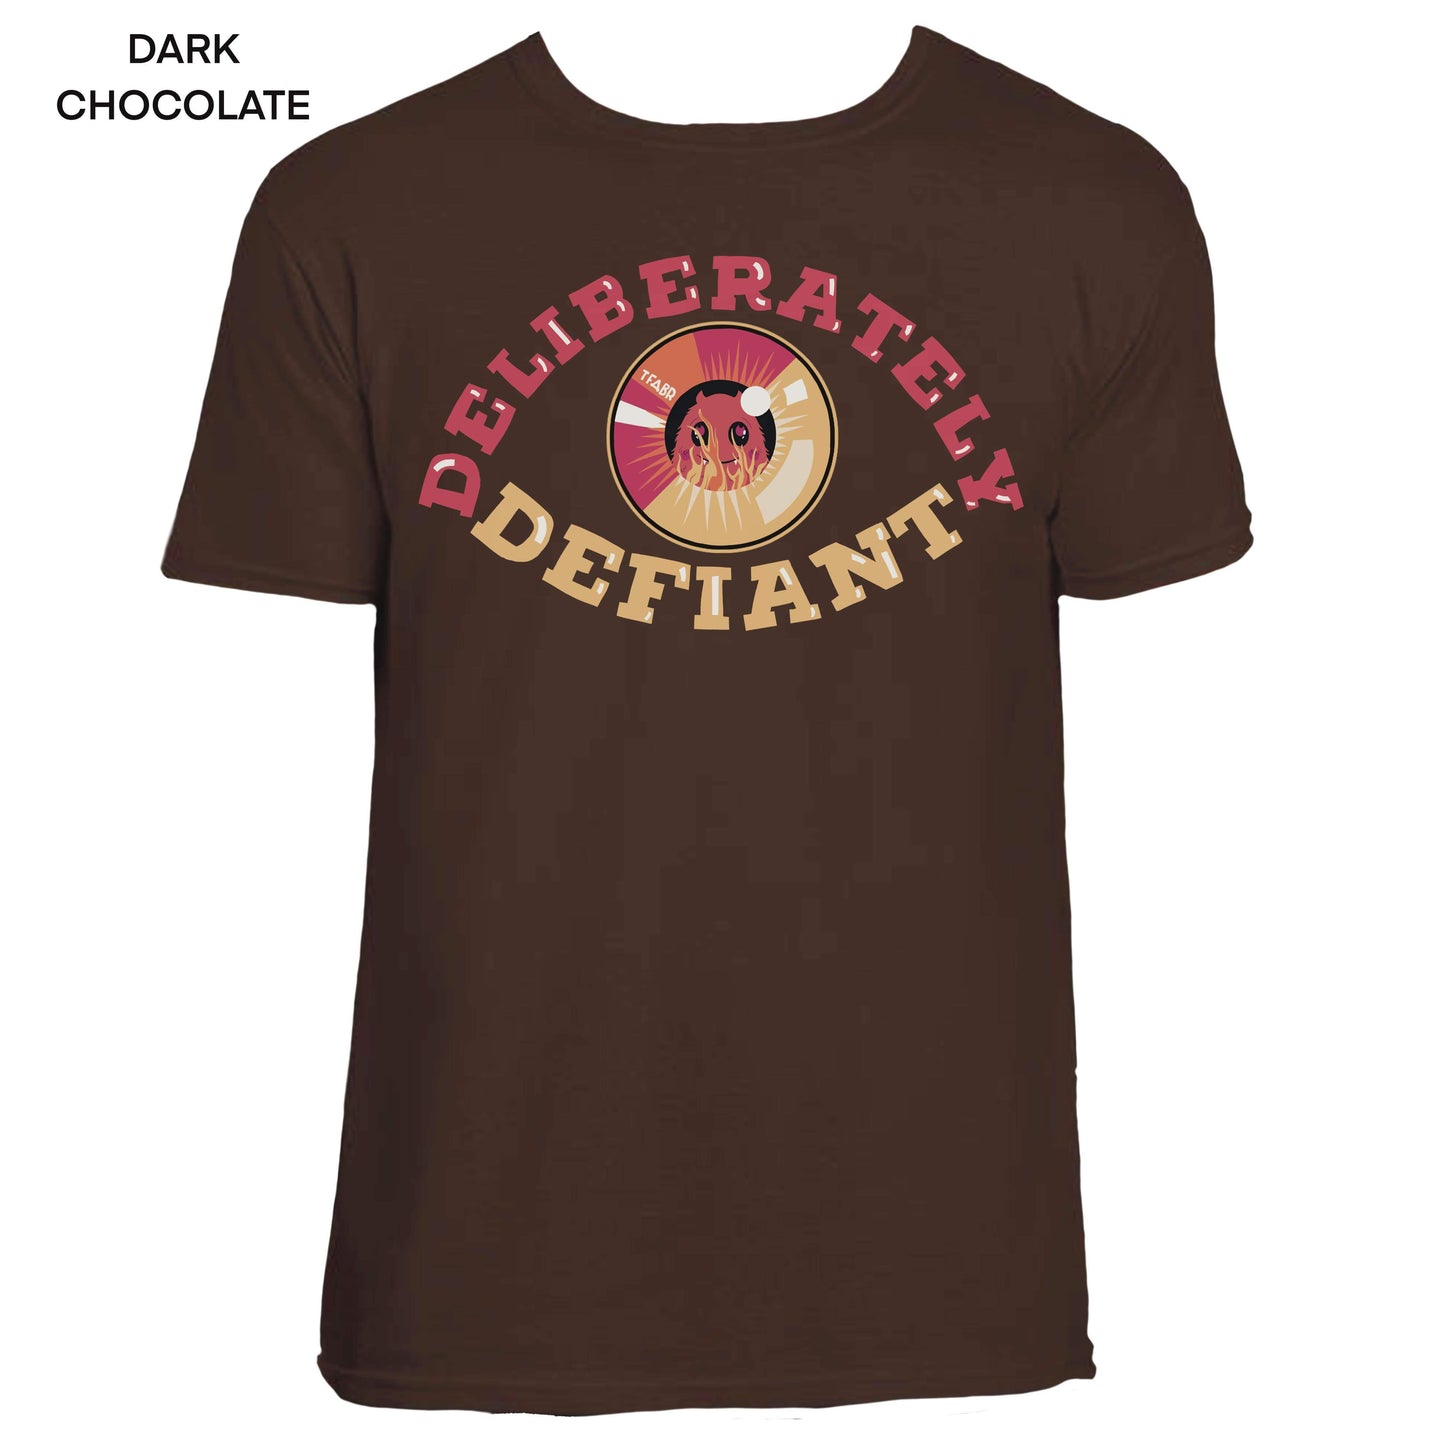 Deliberately Defiant T-Shirt